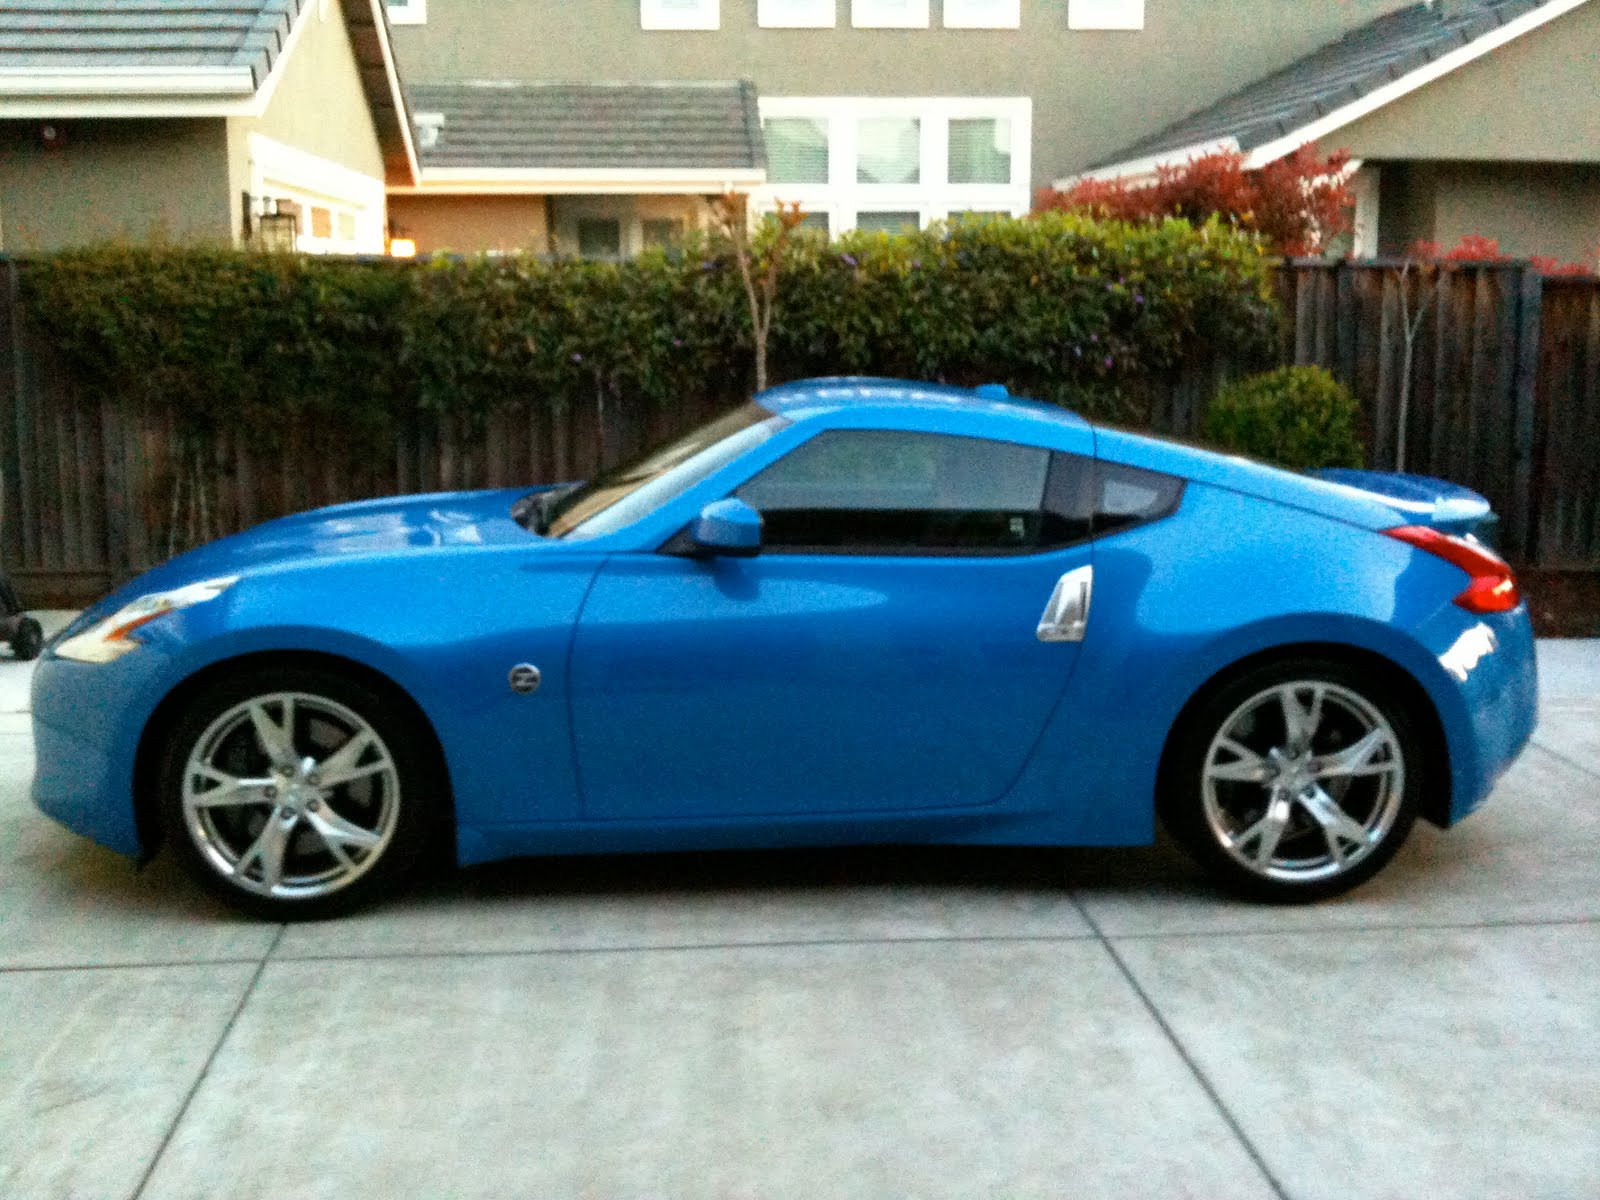 It's the best blue sports car